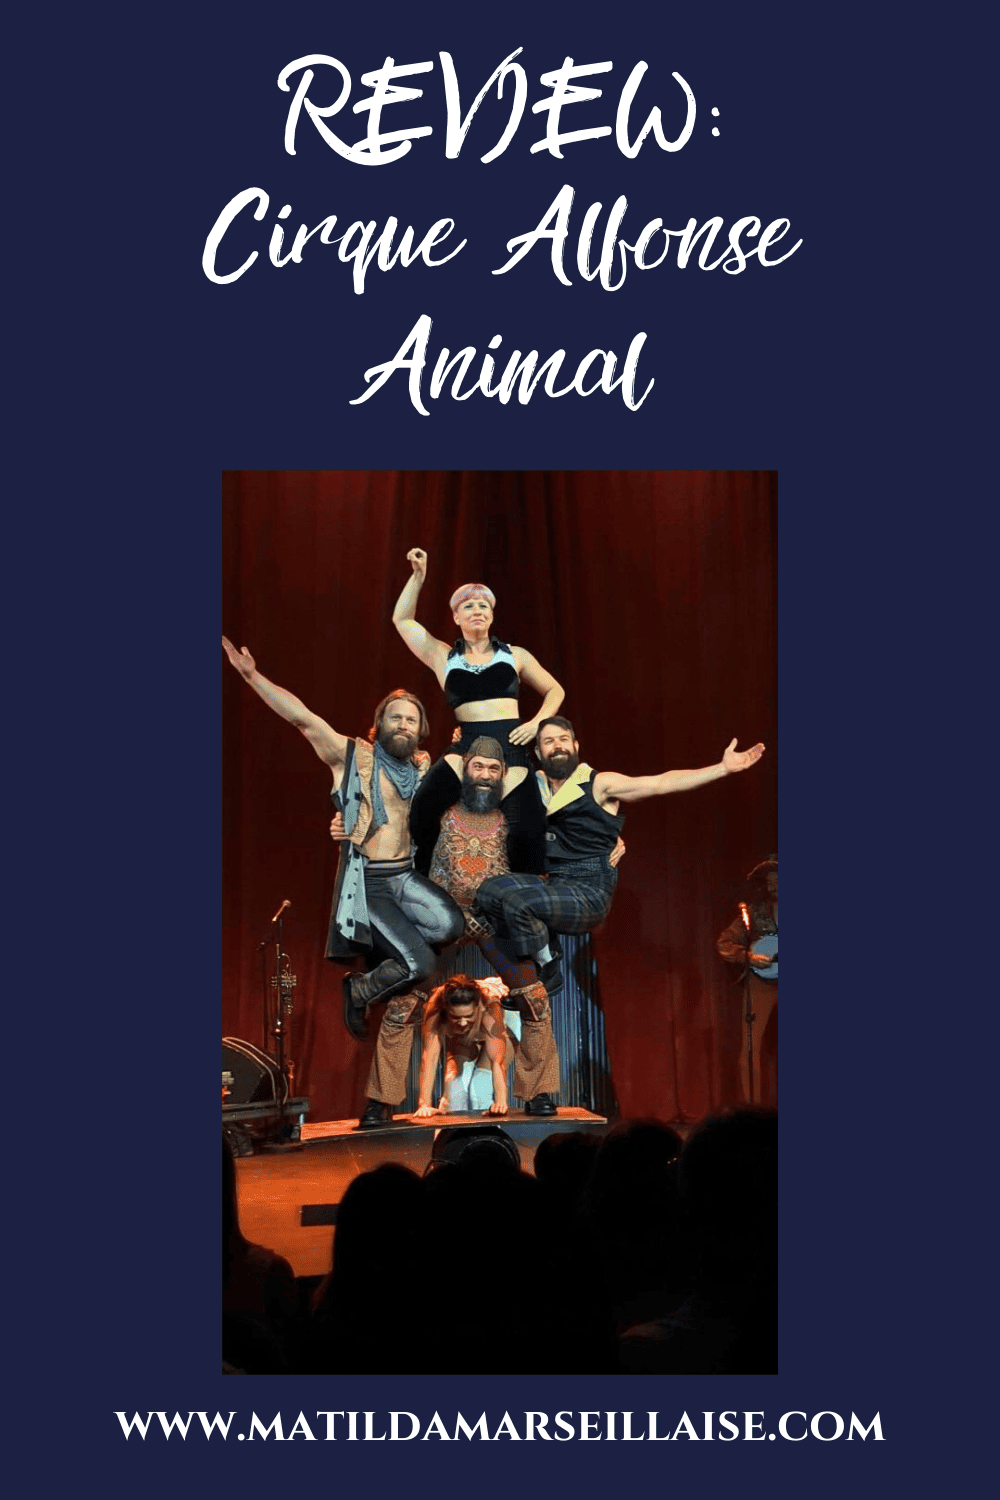 Cirque Alfonse’s new show Animal is barnyard brilliance